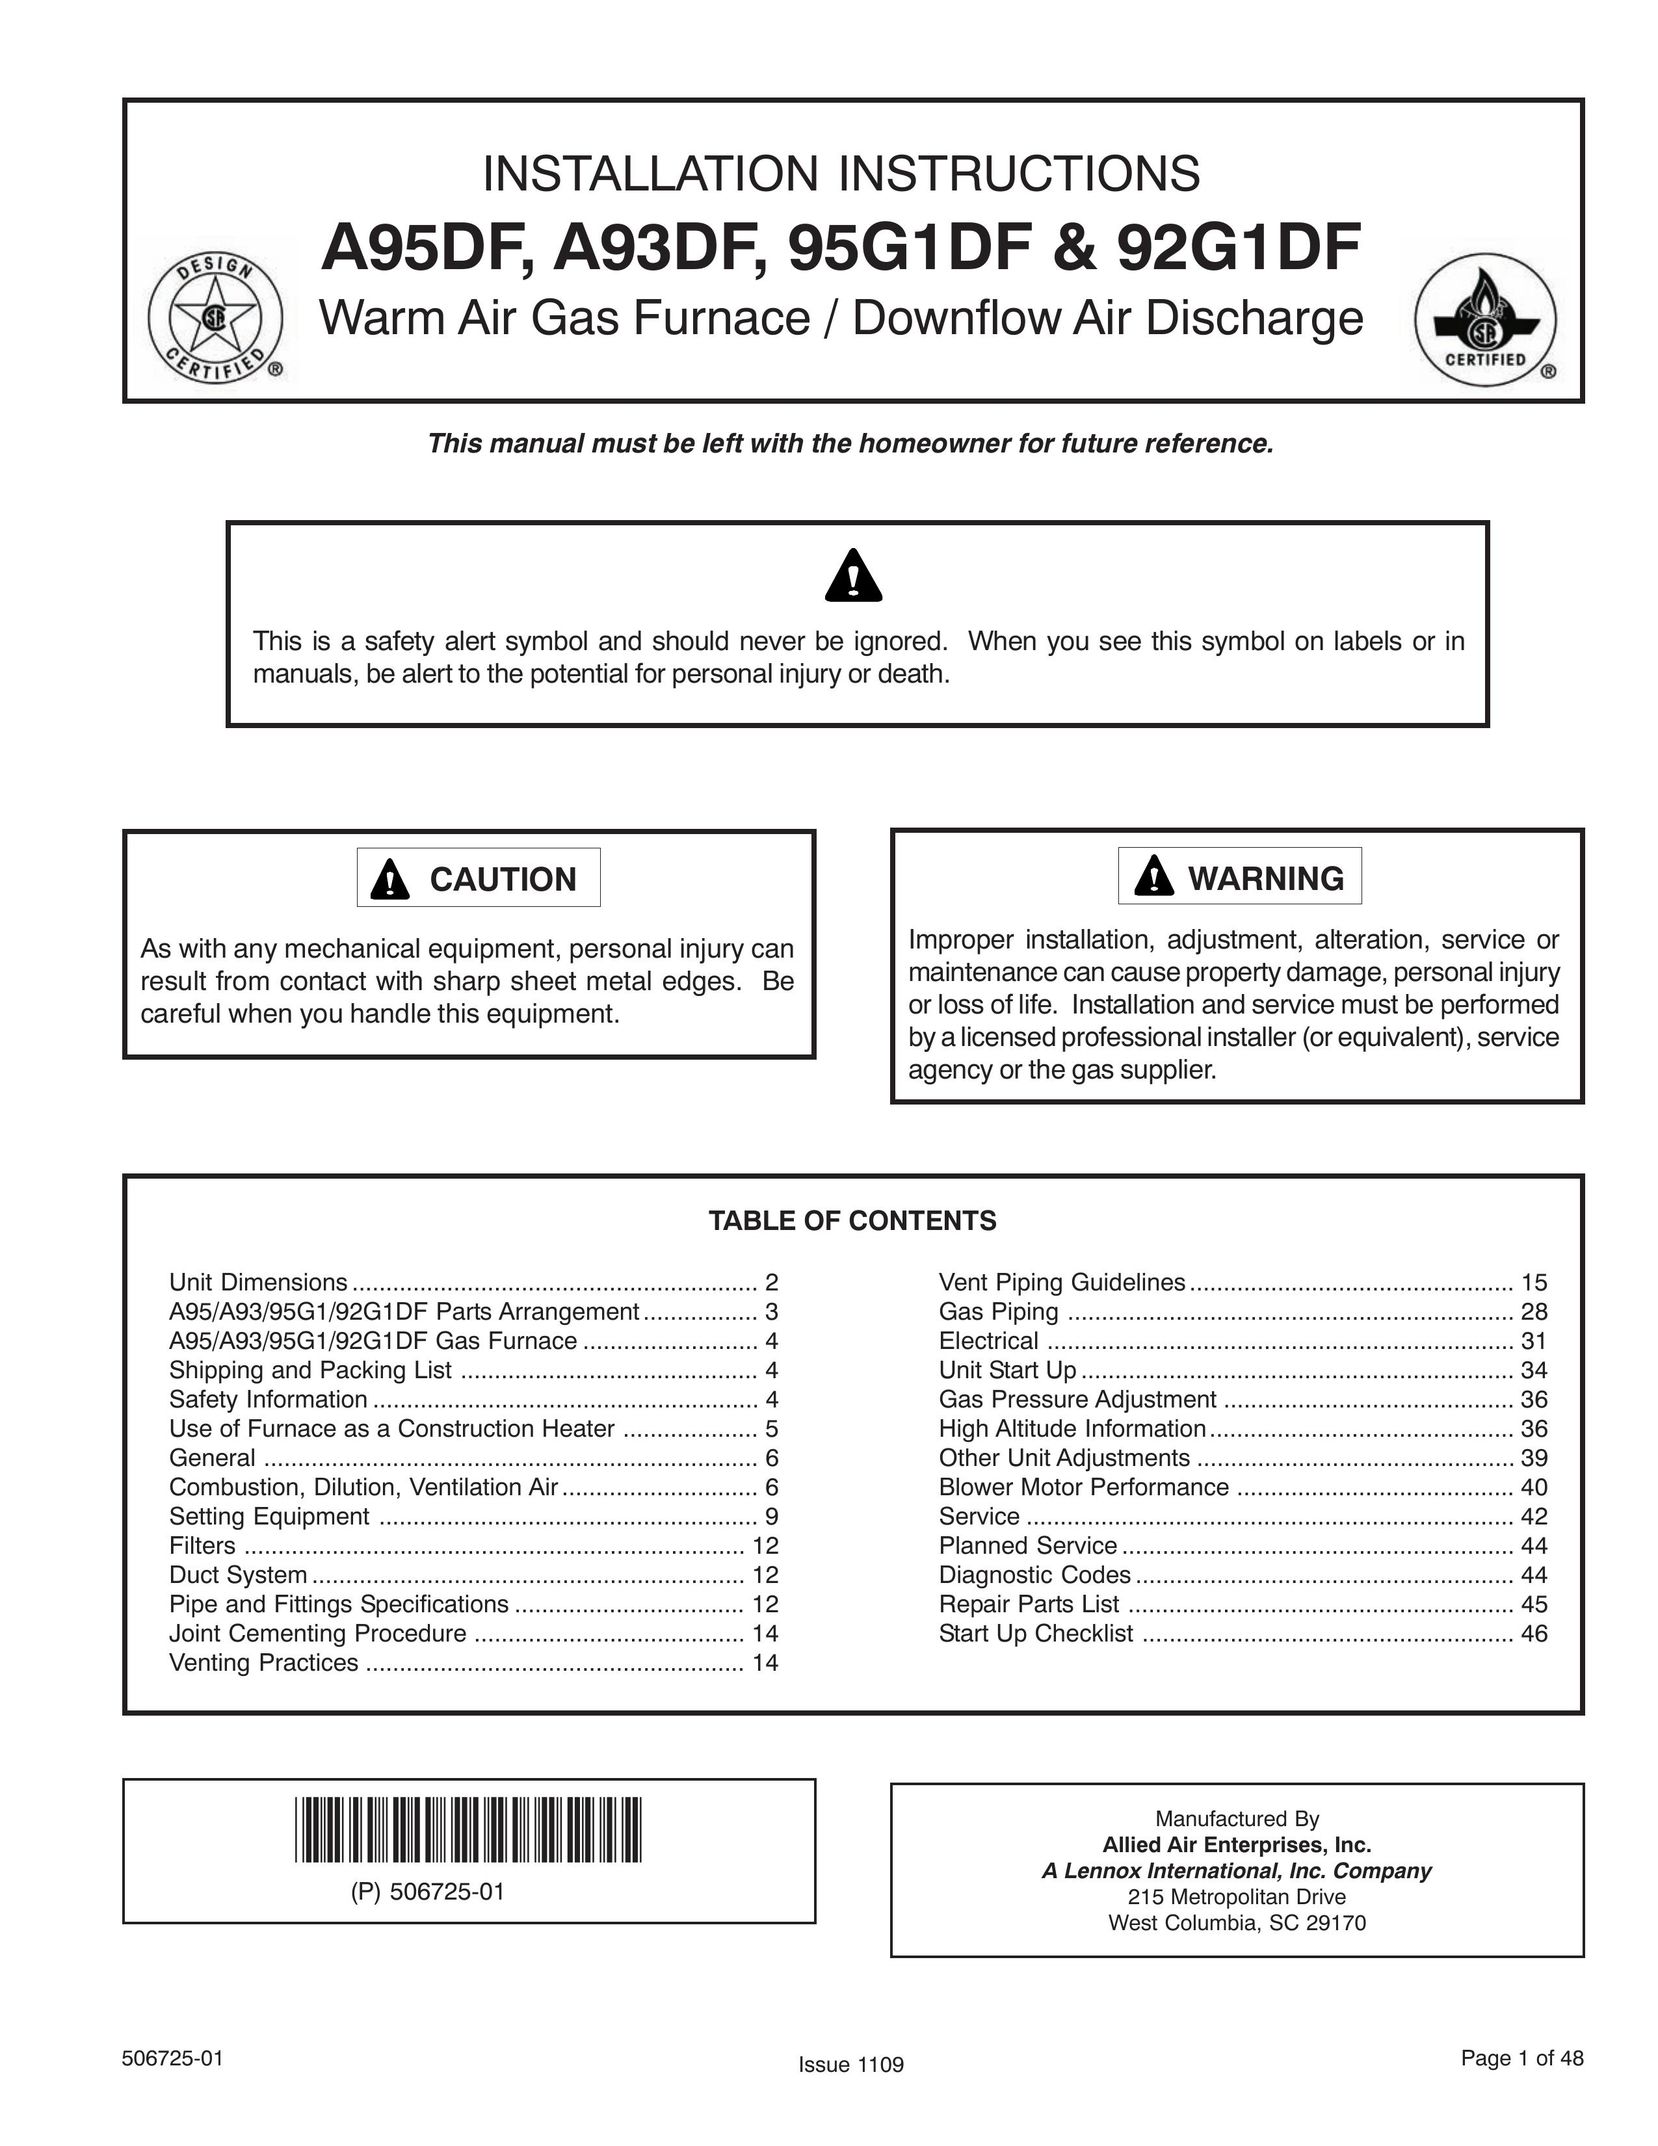 Allied Air Enterprises A93DF Furnace User Manual